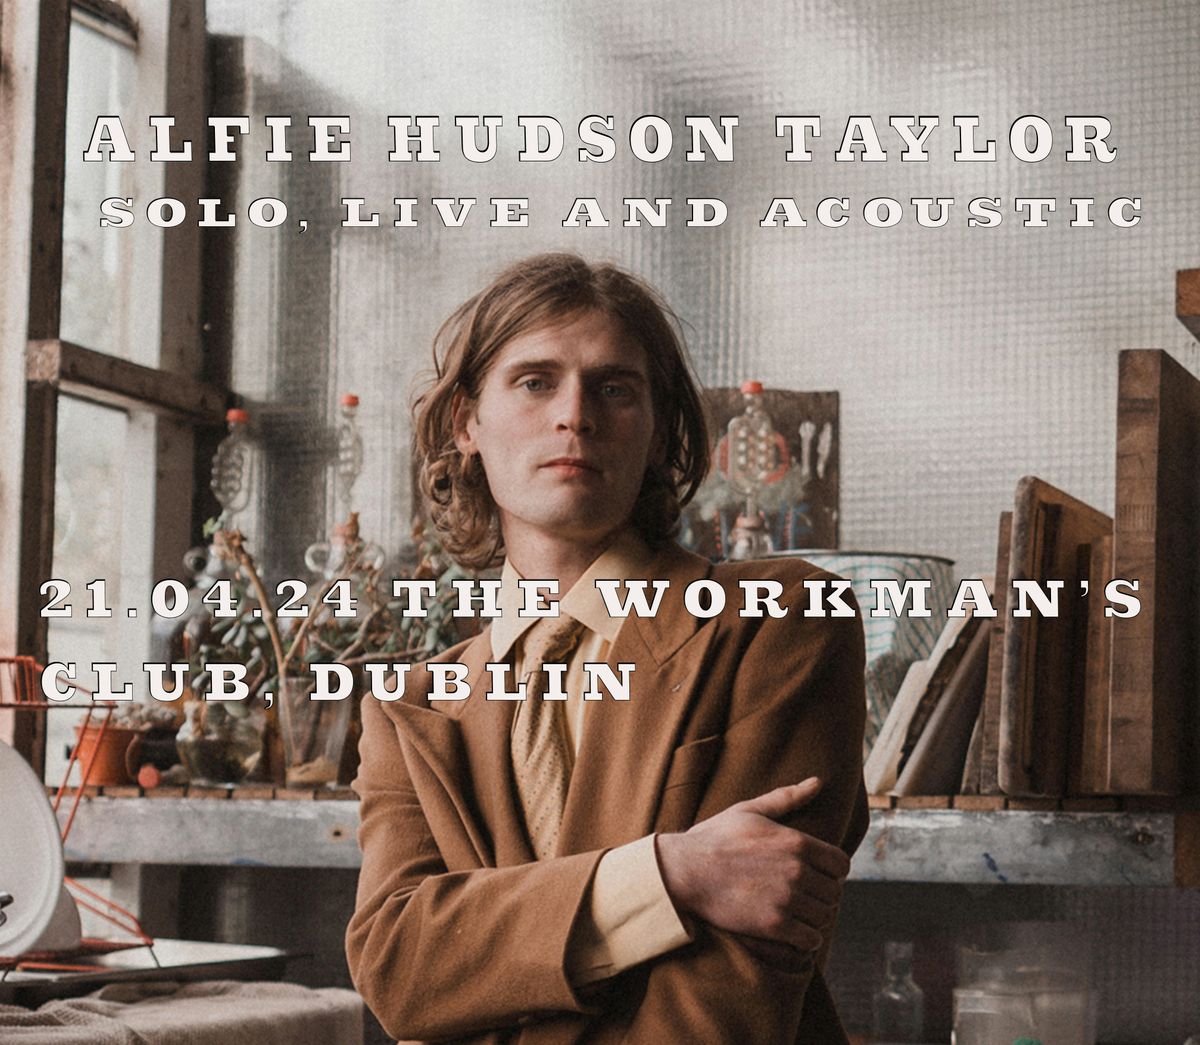 Alfie Hudson Taylor - Solo, Live and Acoustic - The Workman's Club, Dublin.